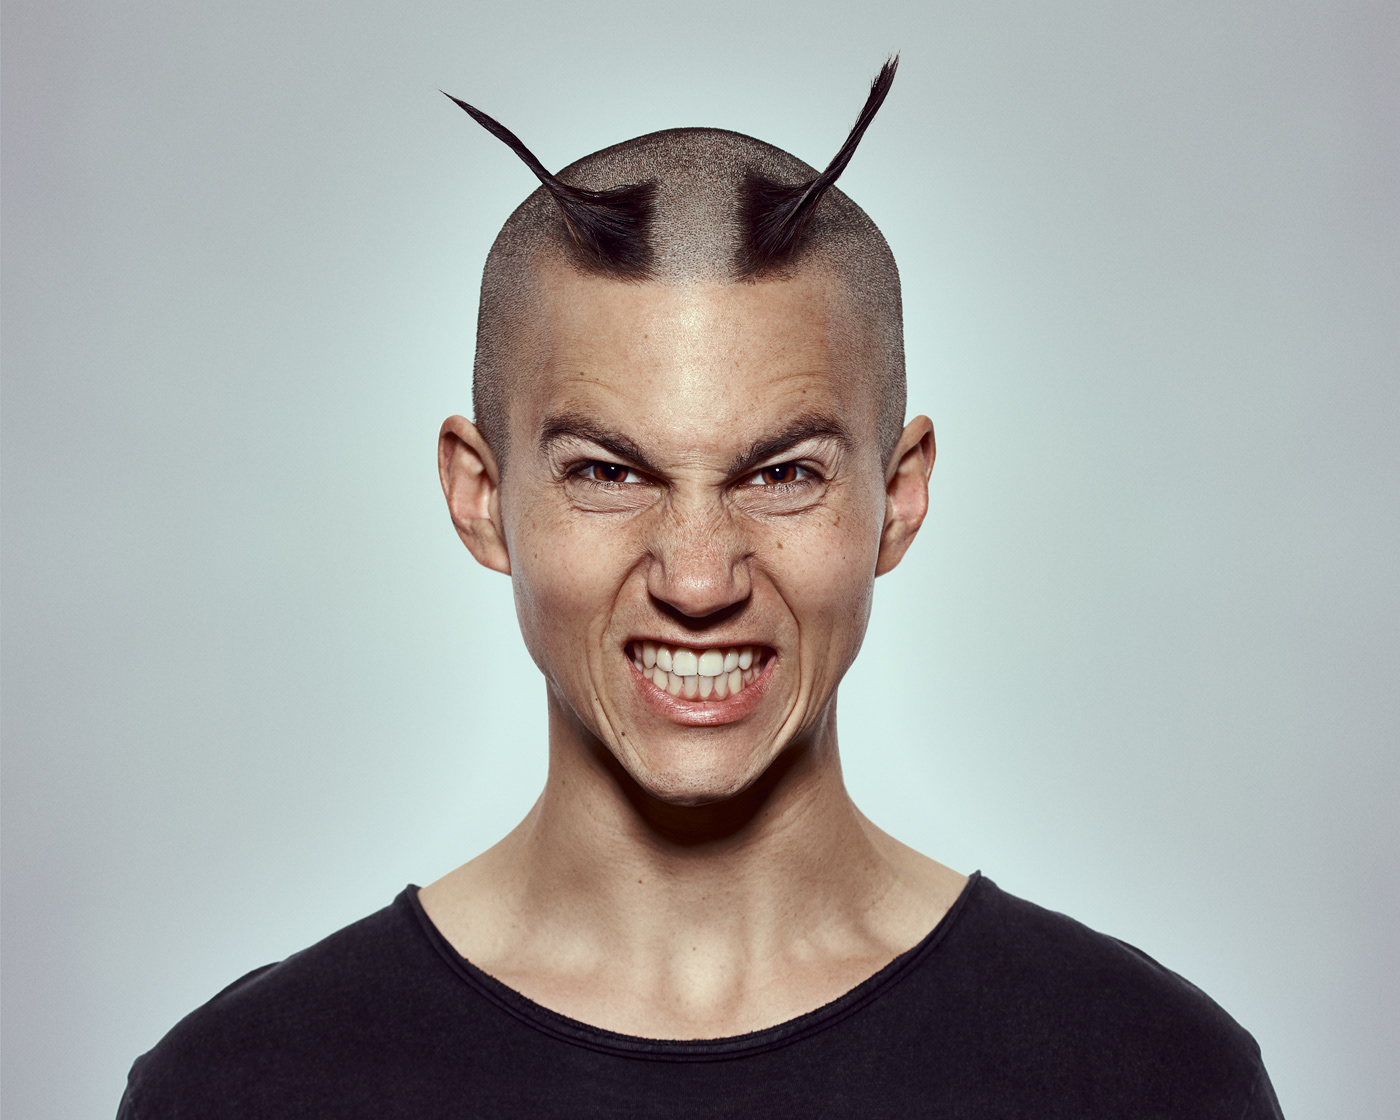 portrait actor Celebrity Agentur Adam vox grithackenberg postproduction haircut bald head tim oliver schultz